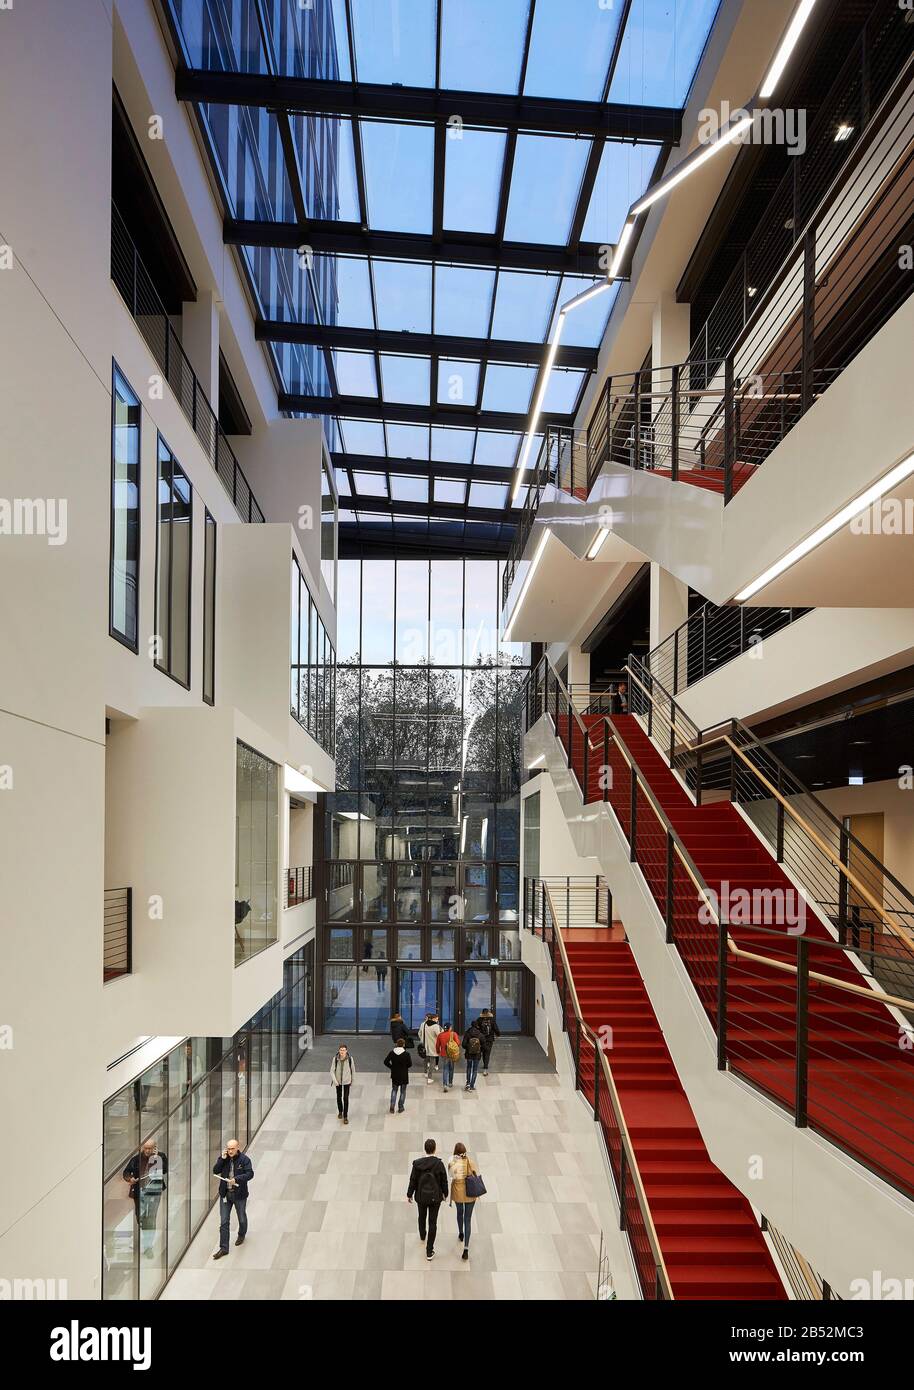 4-storey atrium with stairways and skylights. Frankfurt School of Finance and Management, Frankfurt am Main, Germany. Architect: Henning Larsen, 2017. Stock Photo